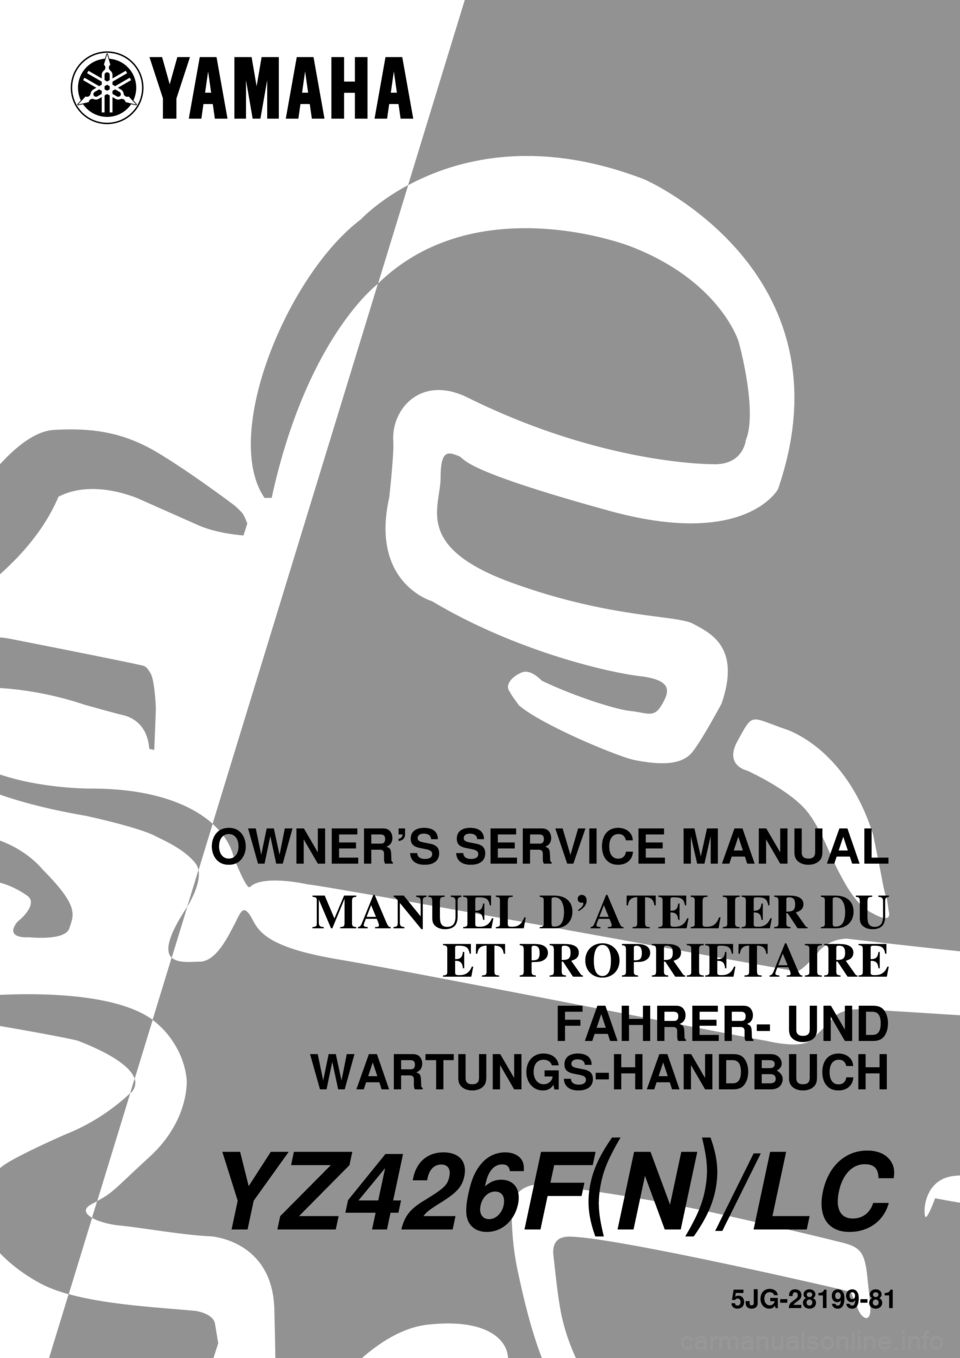 YAMAHA YZ426F 2001  Owners Manual      
 
 
 
5JG-28199-81
YZ426F(N)/LC
OWNER’S SERVICE MANUAL
MANUEL D’ATELIER DU
ET PROPRIETAIRE
FAHRER- UND
WARTUNGS-HANDBUCH 